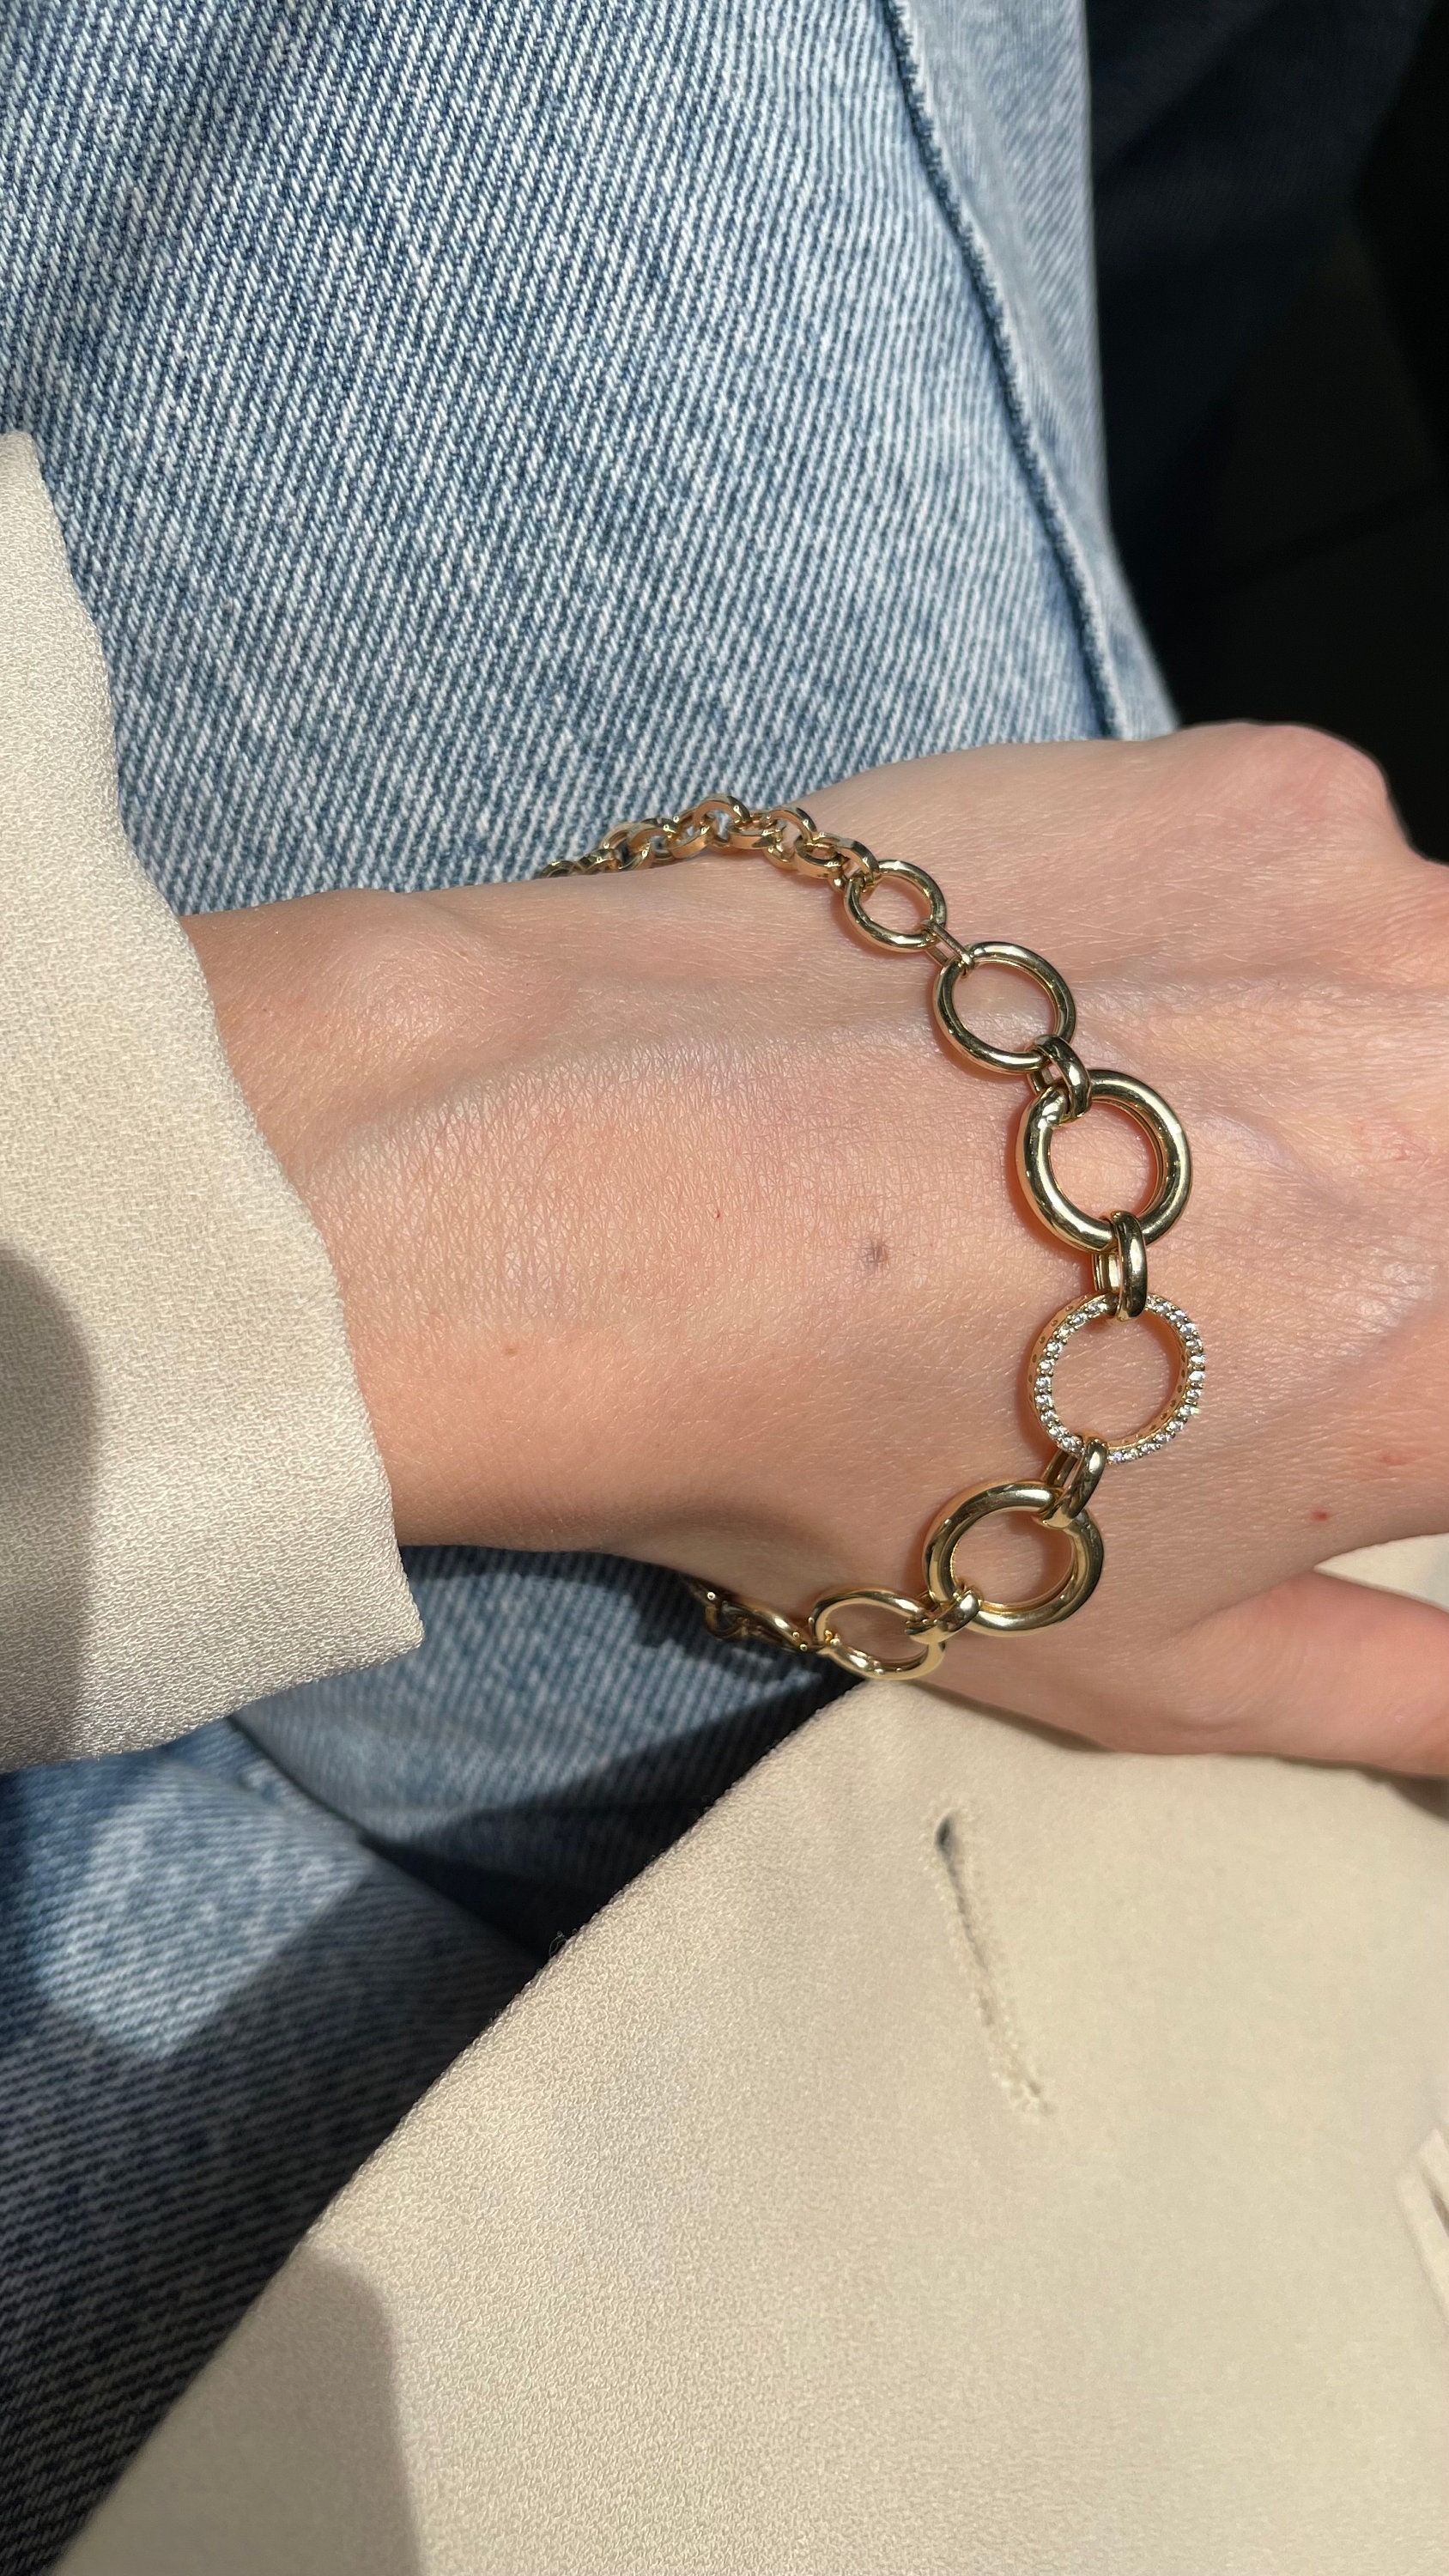 14k solid gold rolo chain necklace bracelet extender 1.5 mm 1- 6